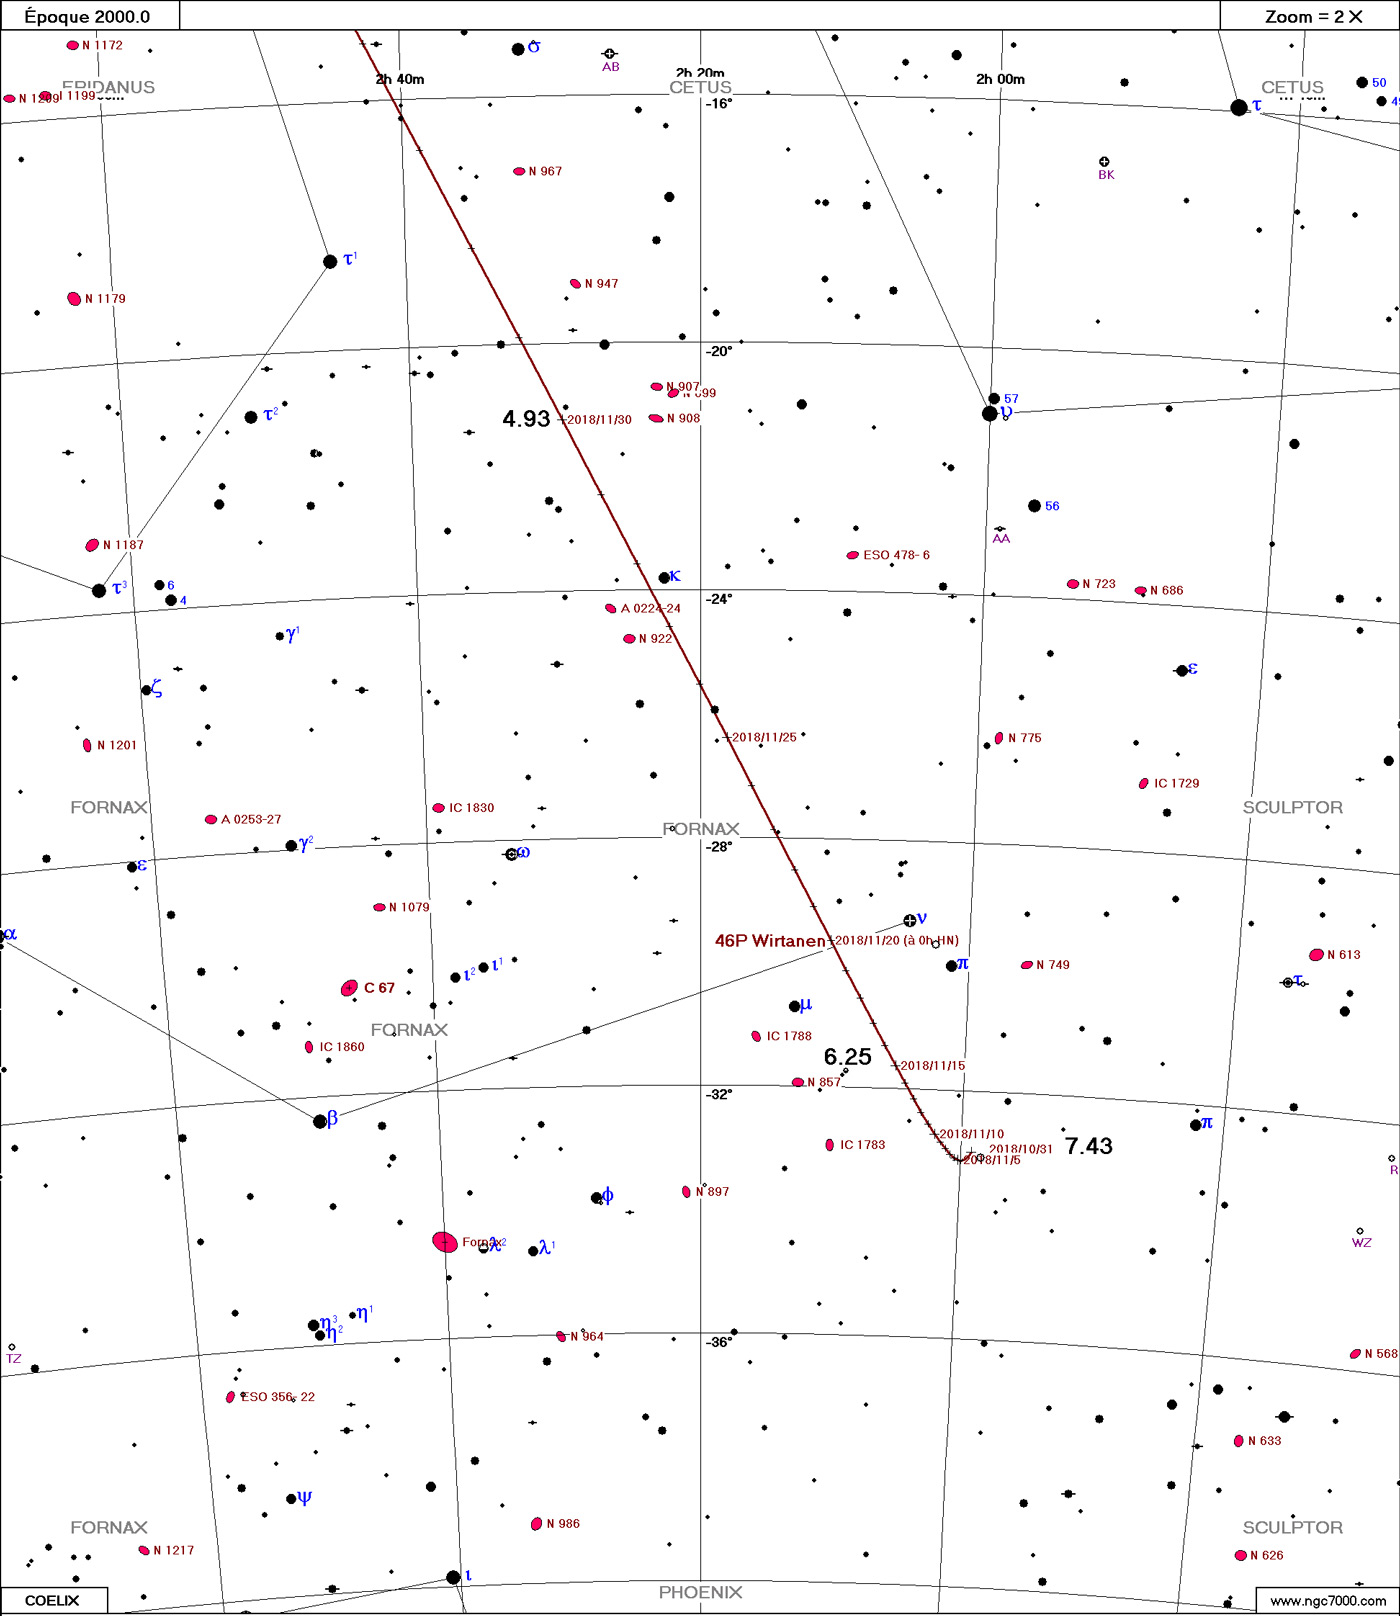 Comète 46P/Wirtanen Wirtanen11